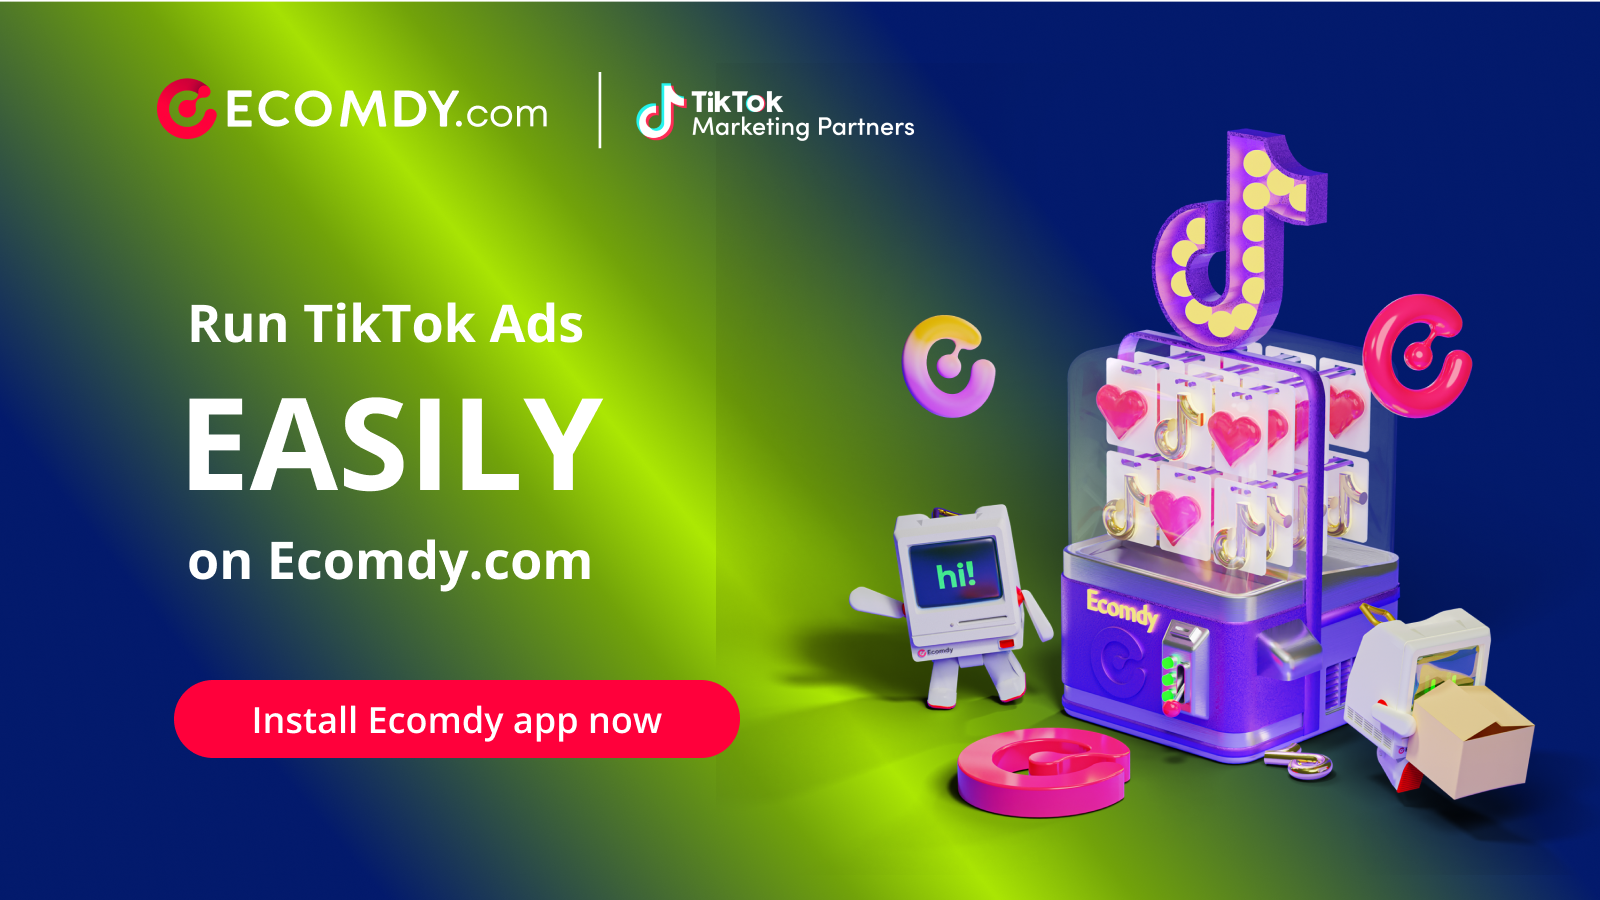 Run TikTok Ads directly on Ecomdy.com